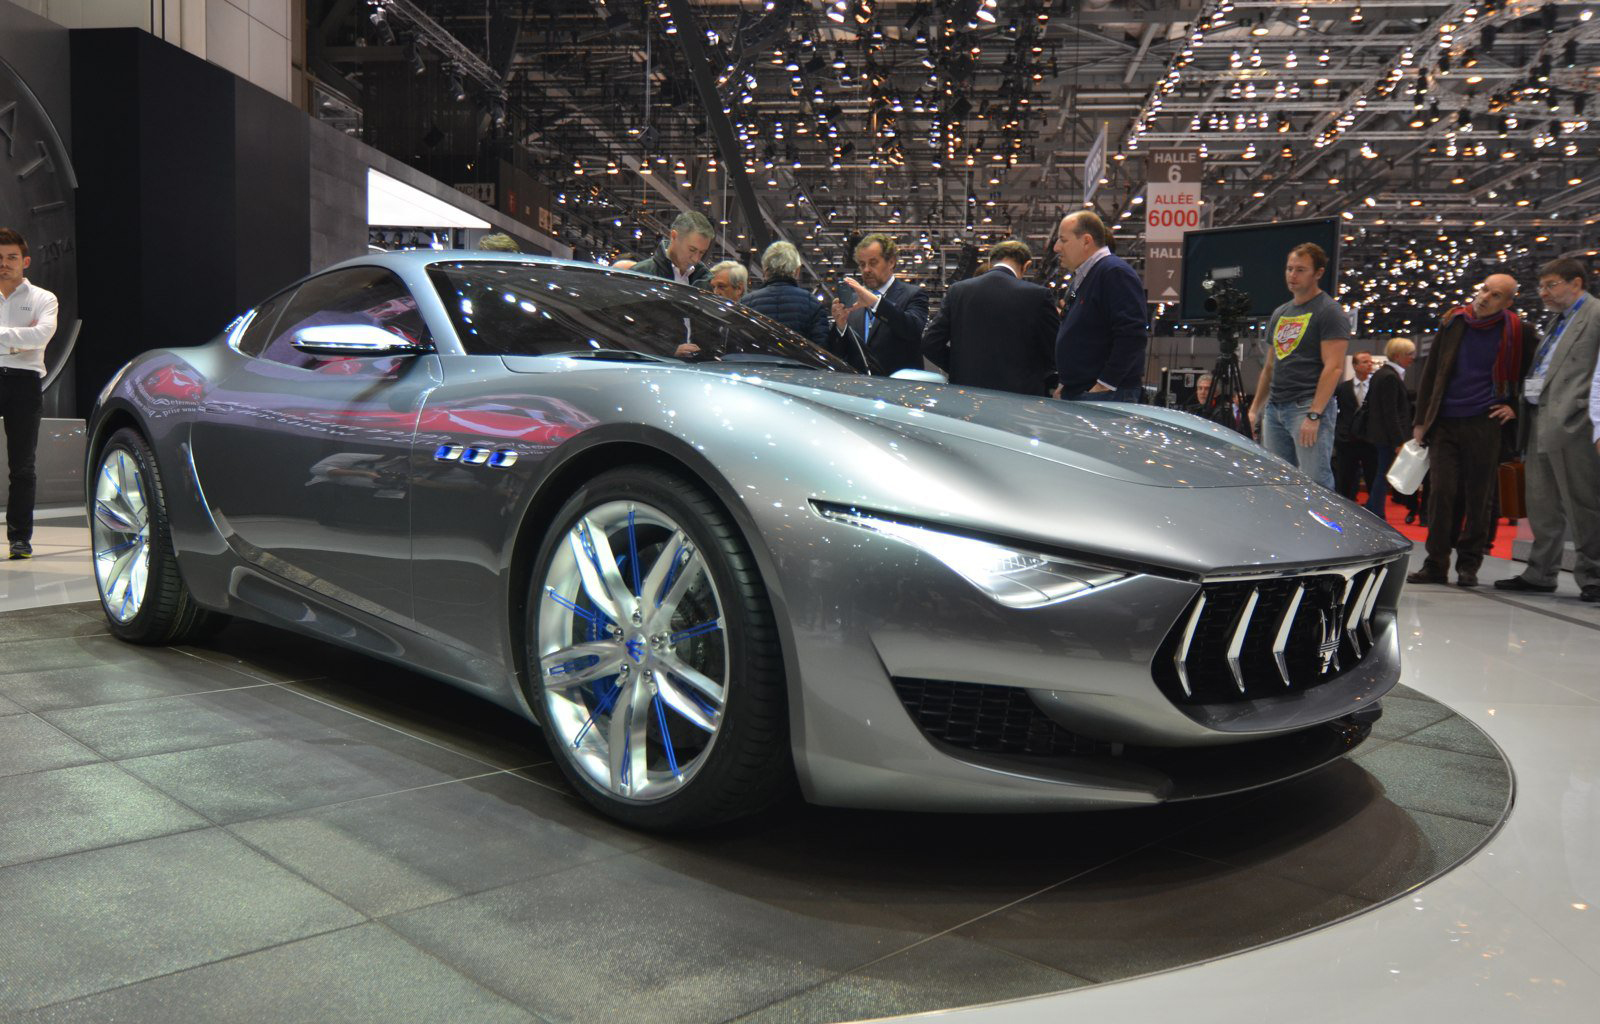 Maserati Alfieri не будет запущен до 2020 года